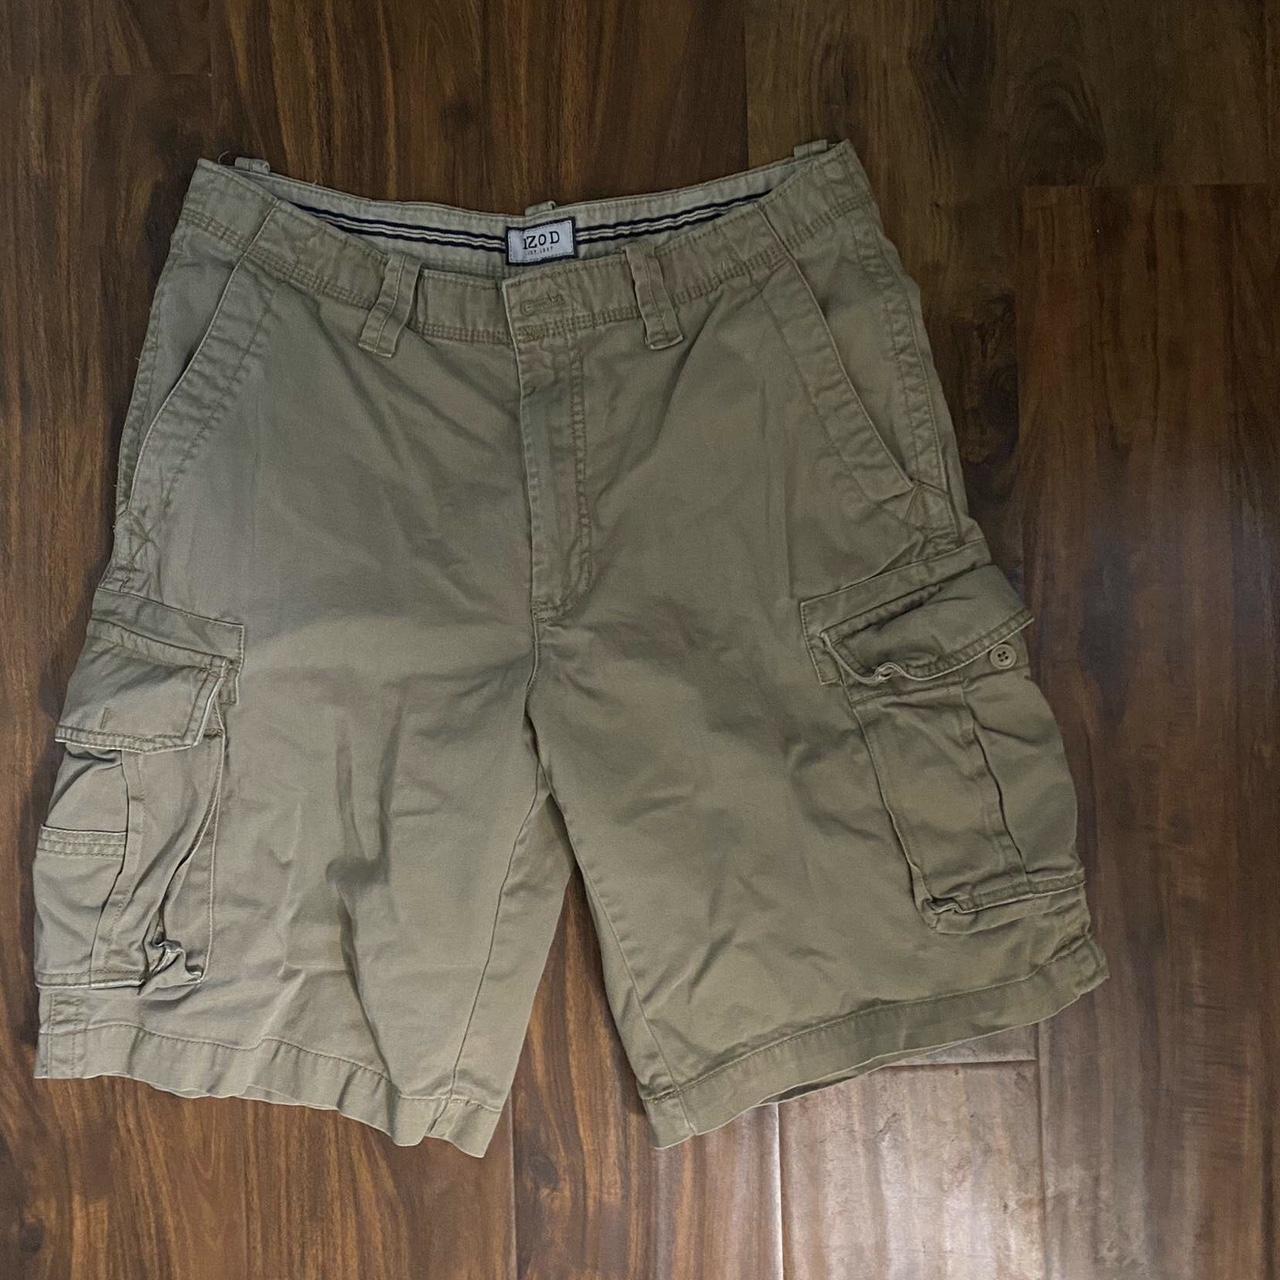 Izod Cargo Shorts - Size L - Depop